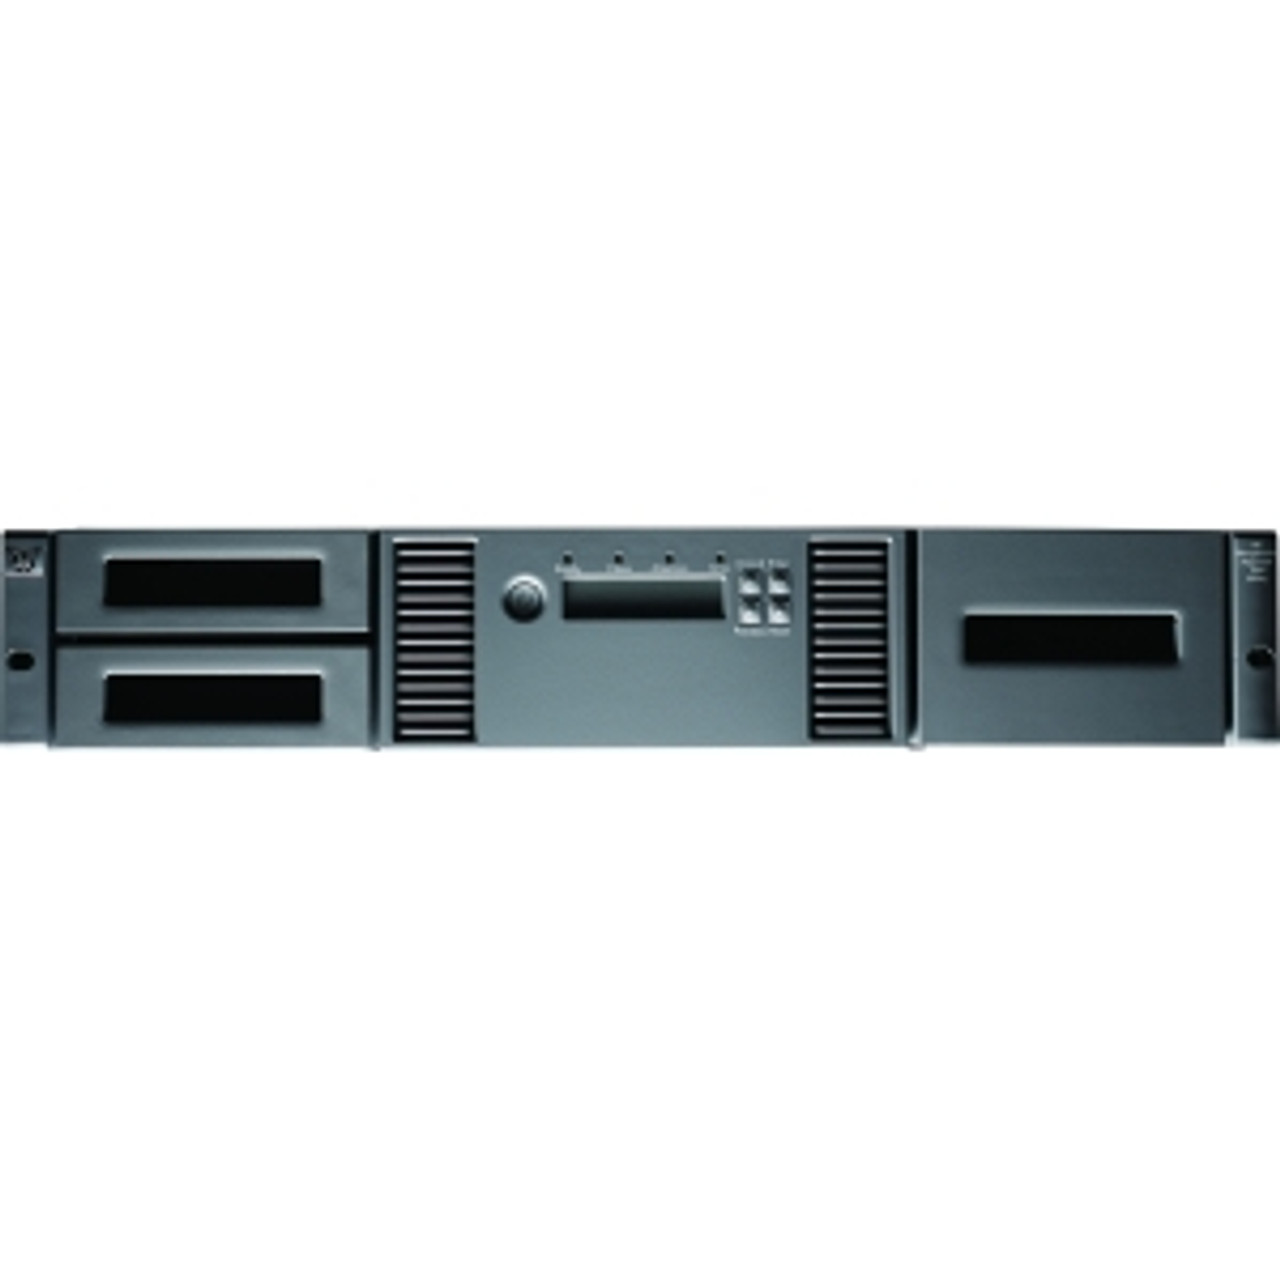 BL537A - HP StorageWorks MSL2024LTO Ultrium 5 Tape Library 1 x Drive/24 x Slot LTO Ultrium 5 36 TB (Native) / 72 TB (Compressed) Serial Attached SCSI (SAS)